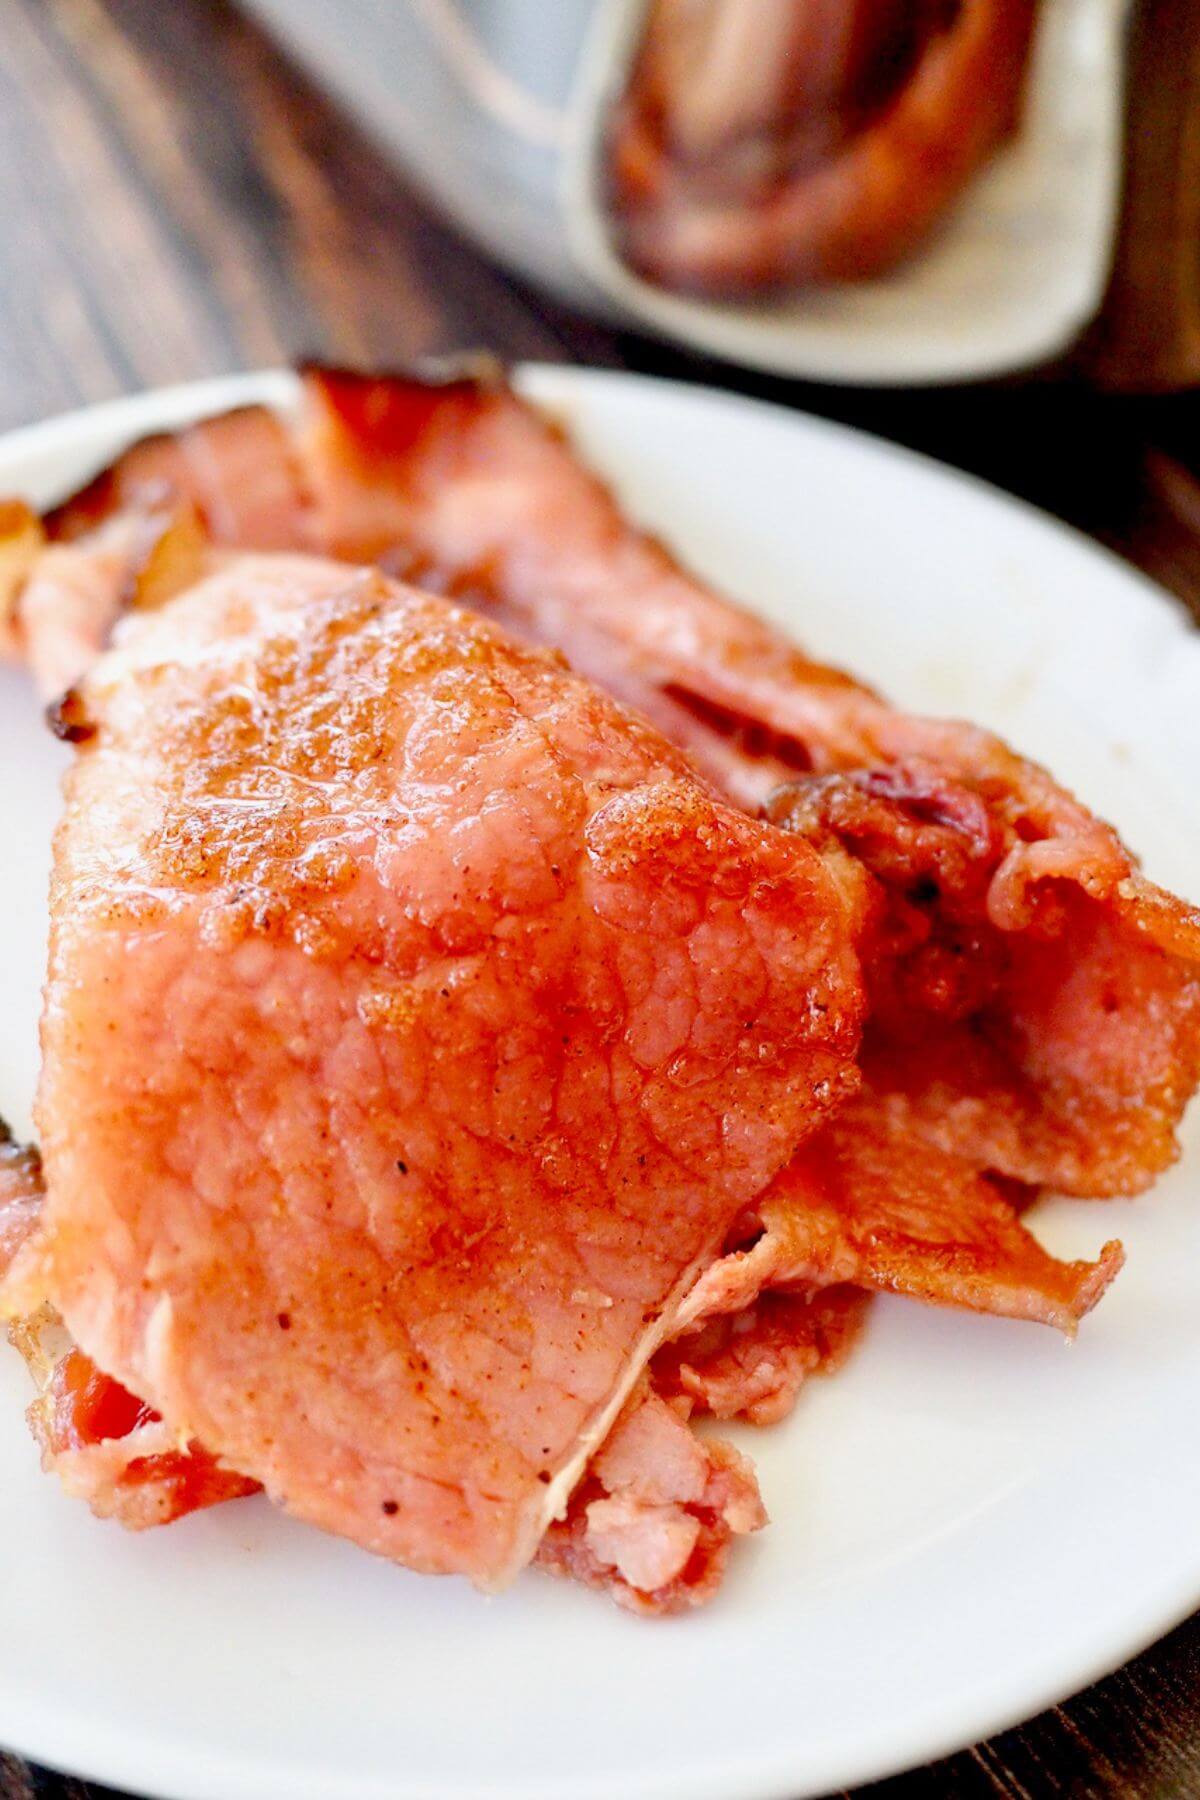 Slices of Spiral Sliced ham with honey baked ham glaze on a plate.